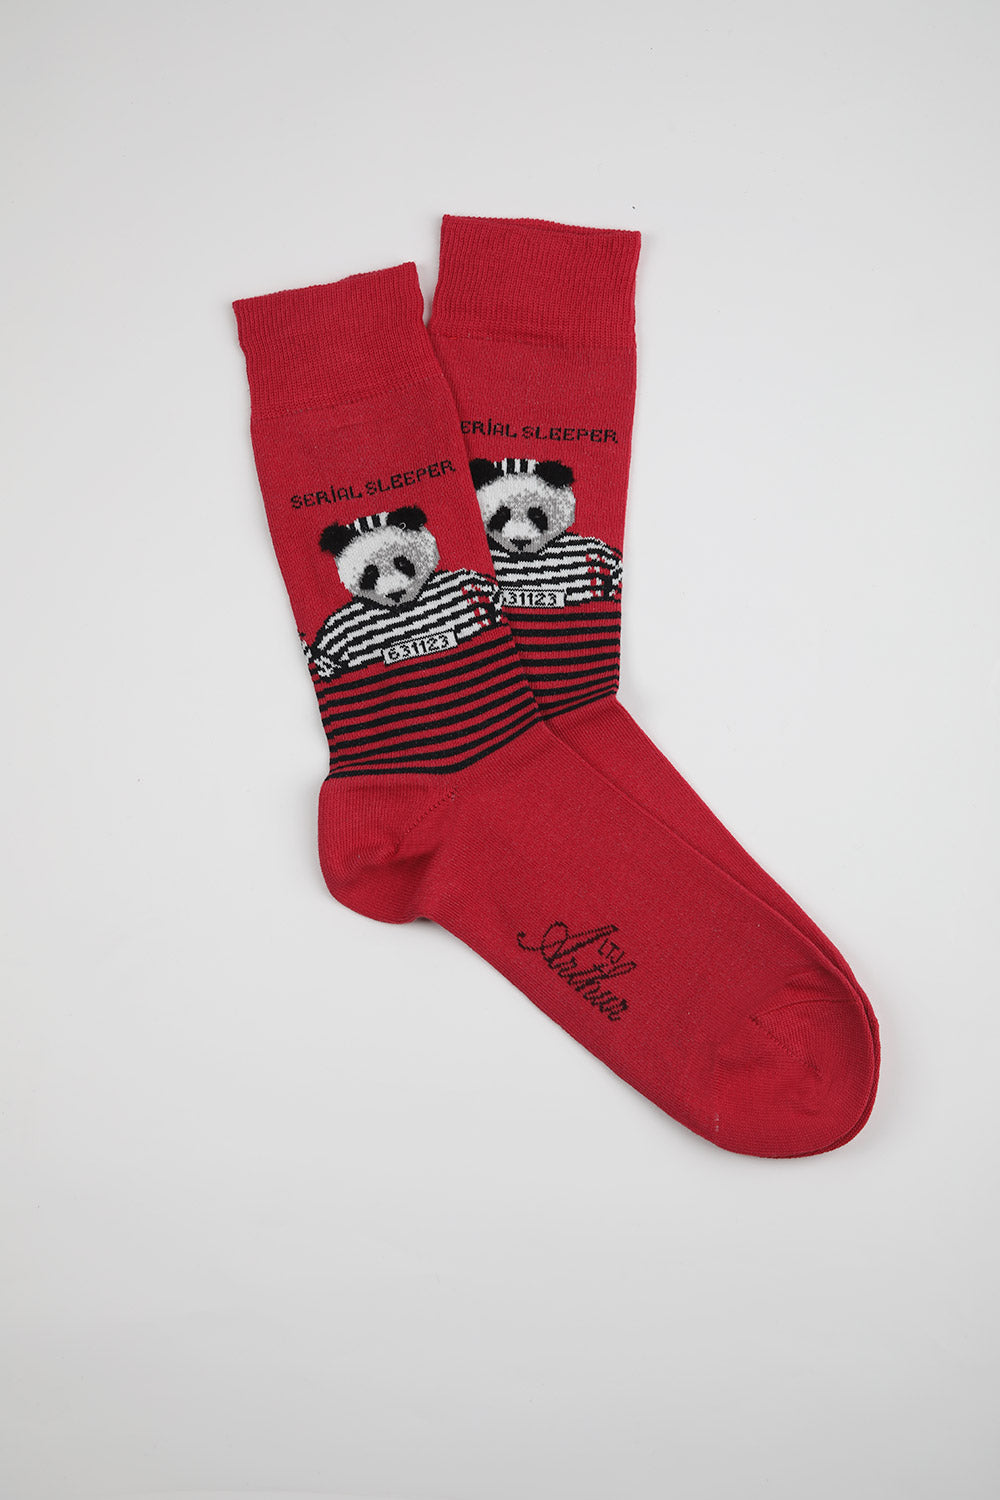 Serial Sleeper Warm Cotton Socks